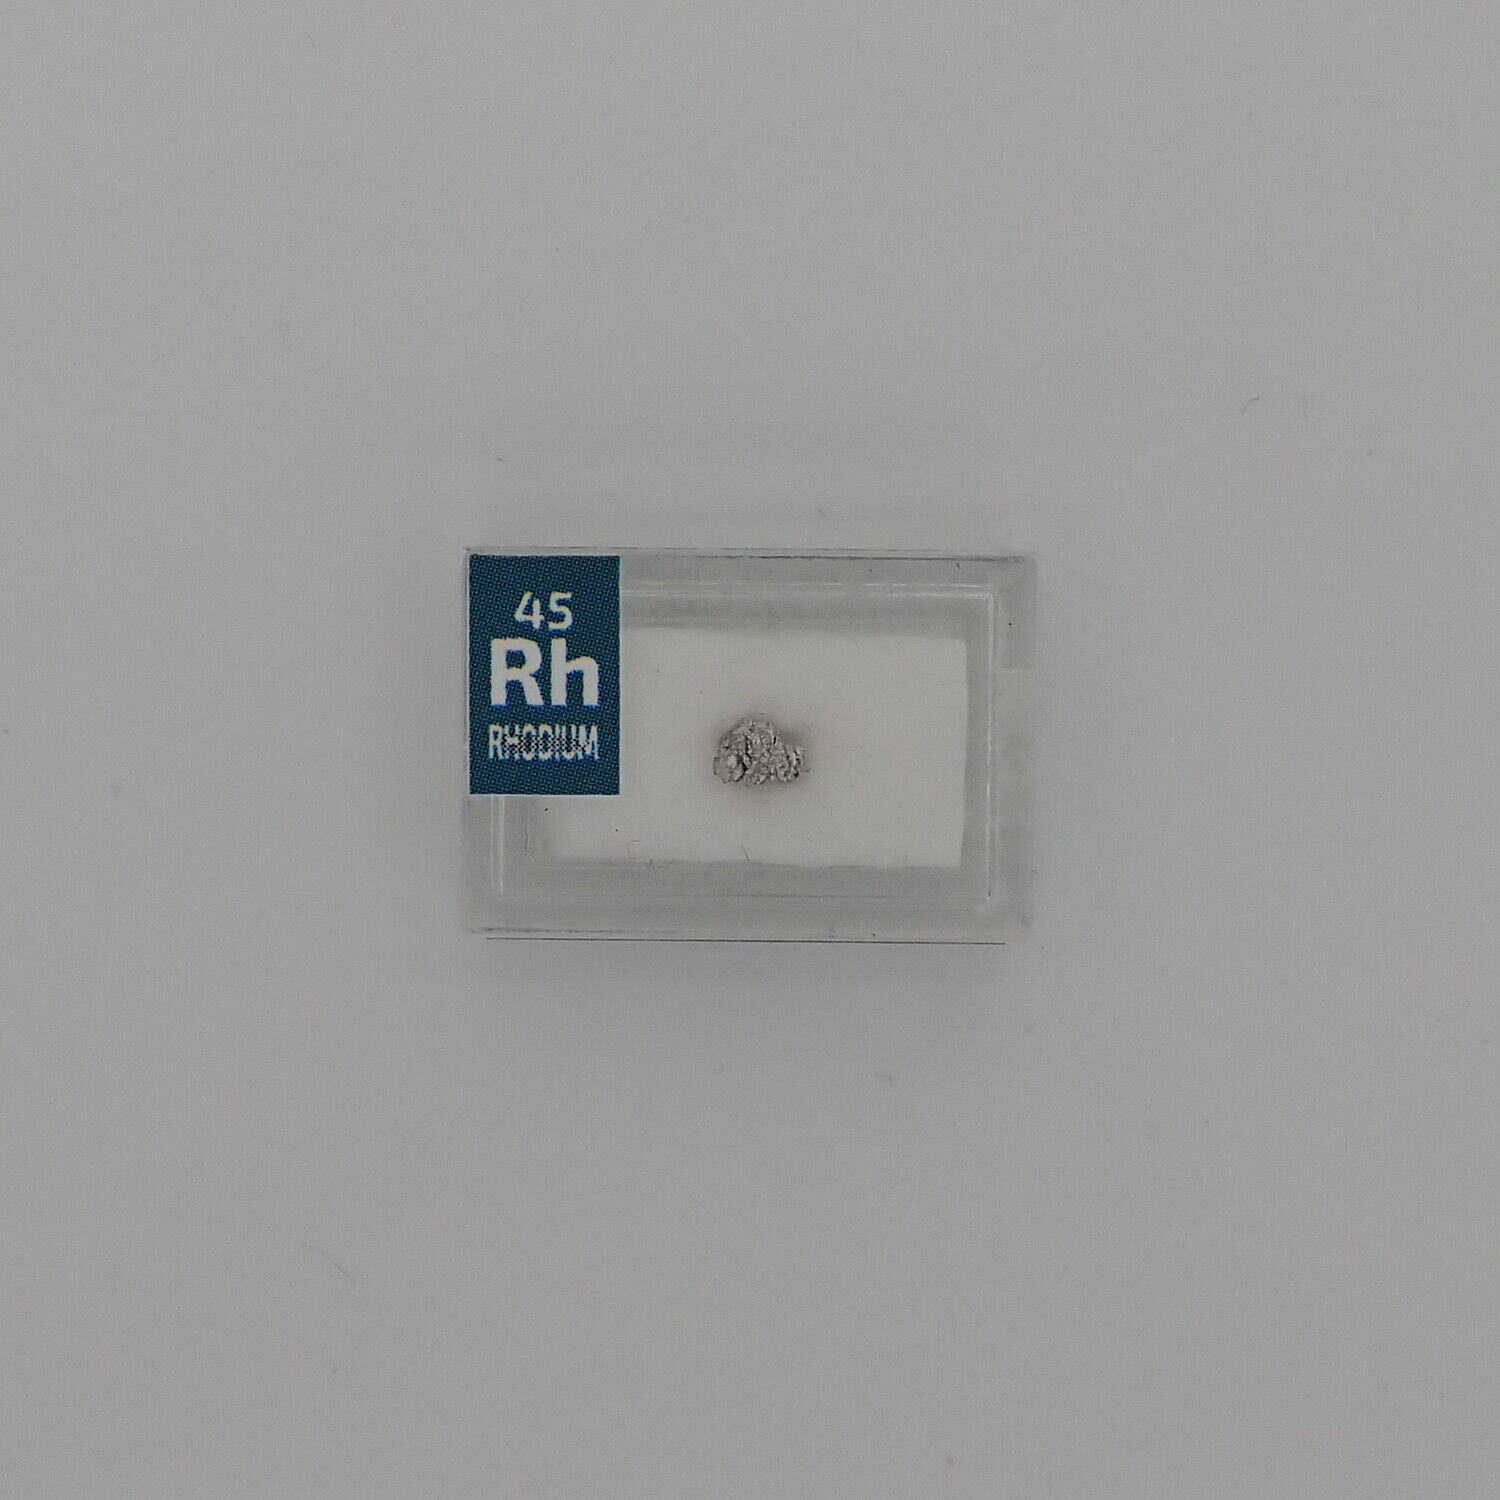 Rhodium Metal 99.99% Pure Crystals Element Sample 0.02 - 0.77 Grams Very Special